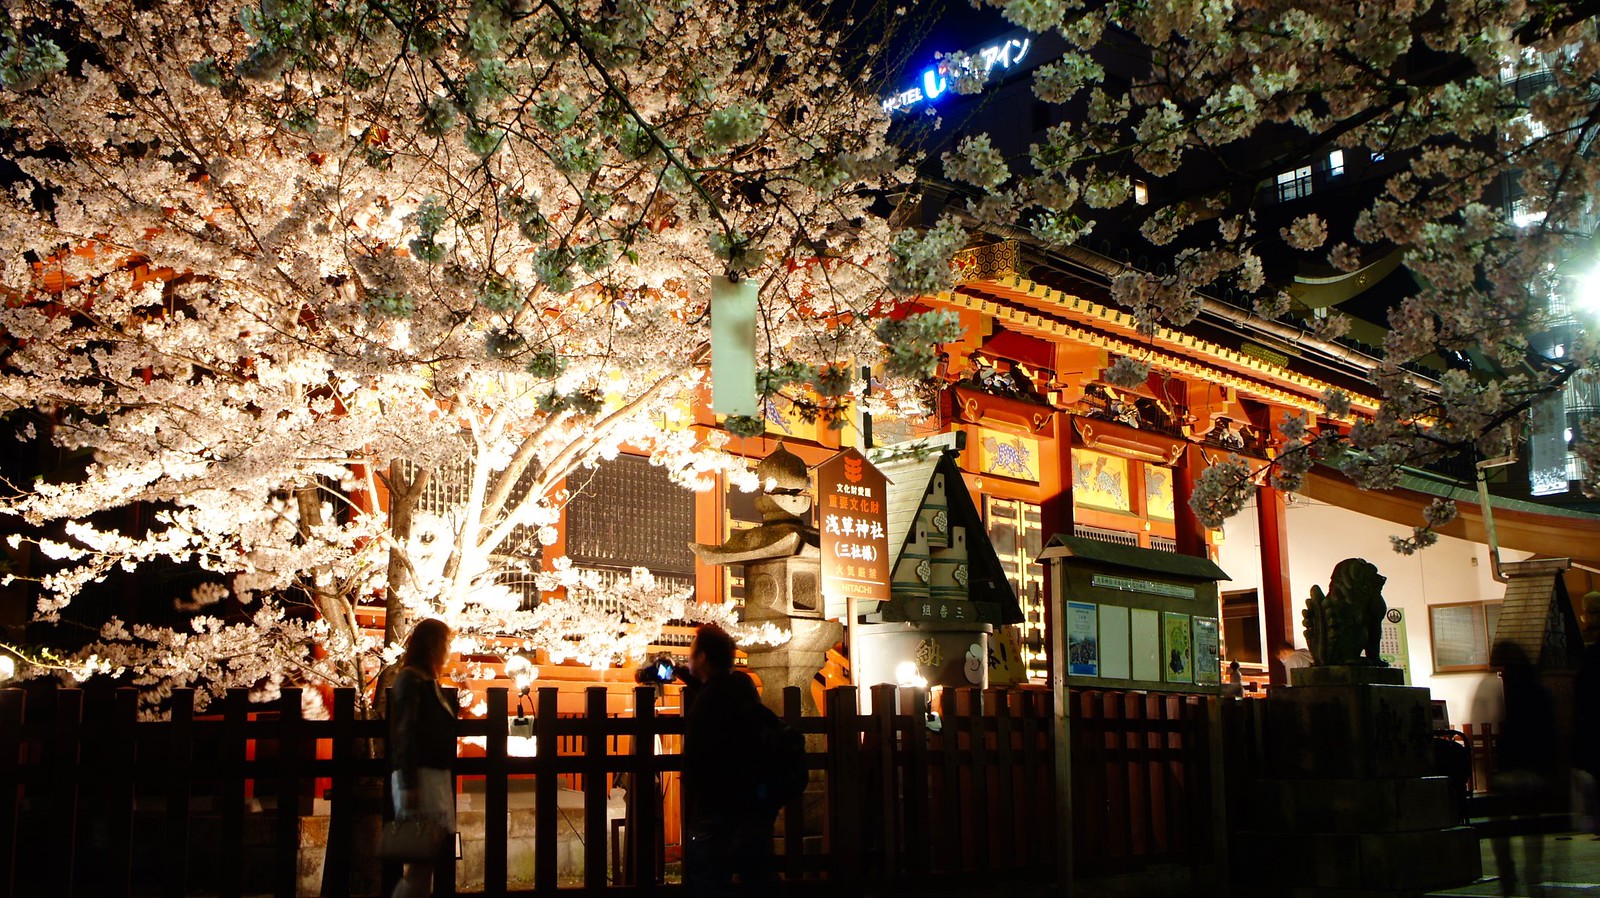 Asakusa Yozakura - Night time illumination of cherry blossoms